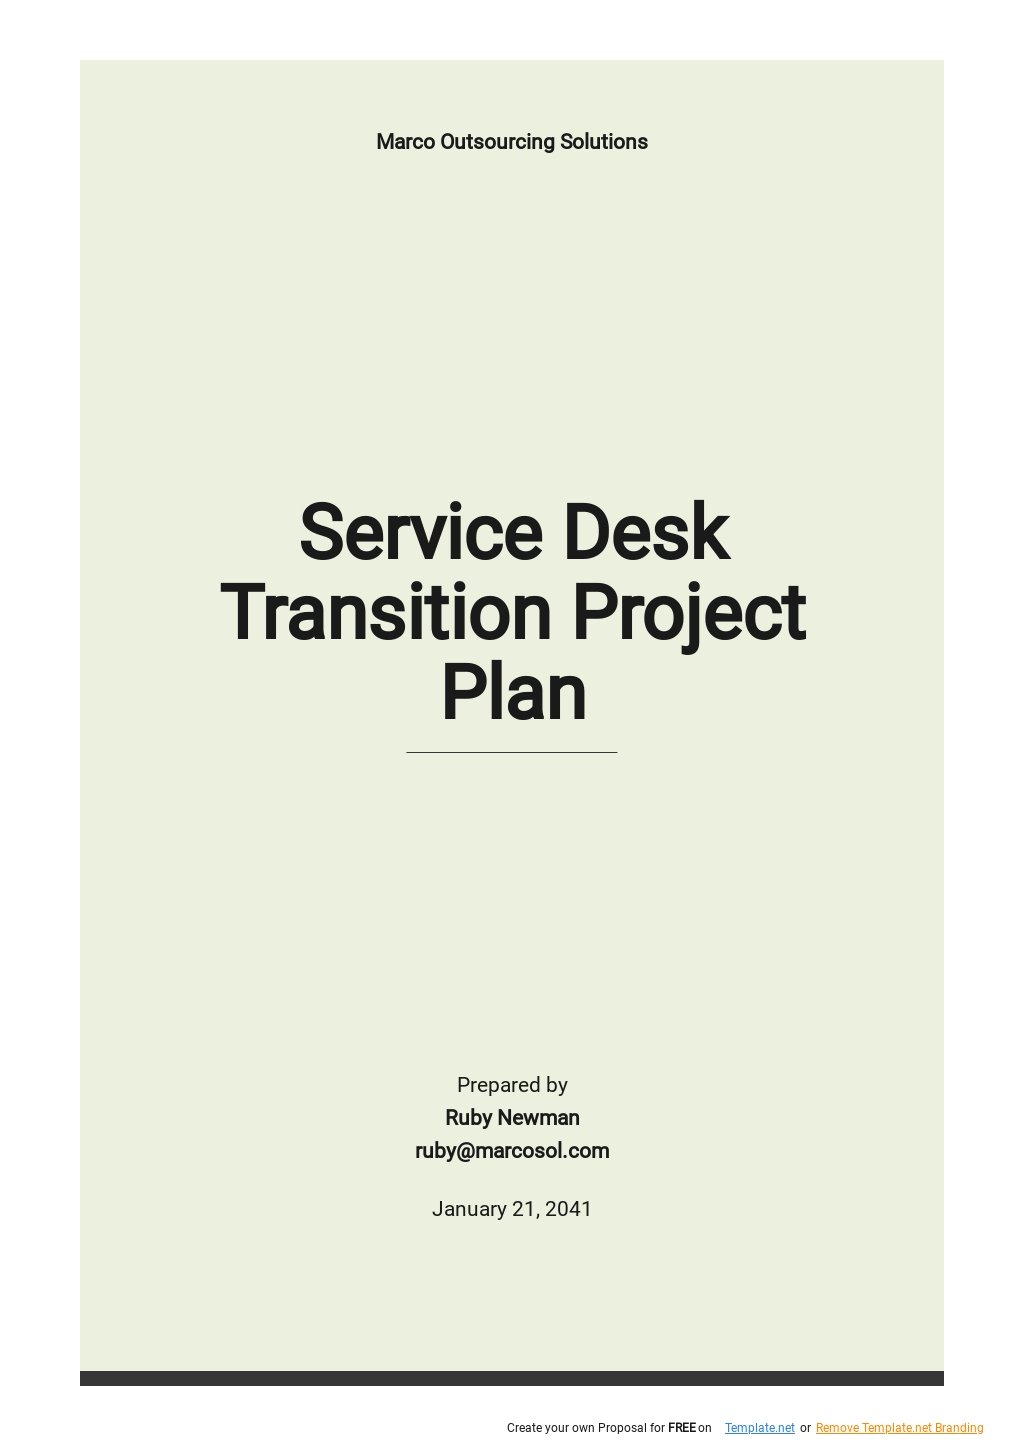 Service Desk Transition Project Plan Template.jpe